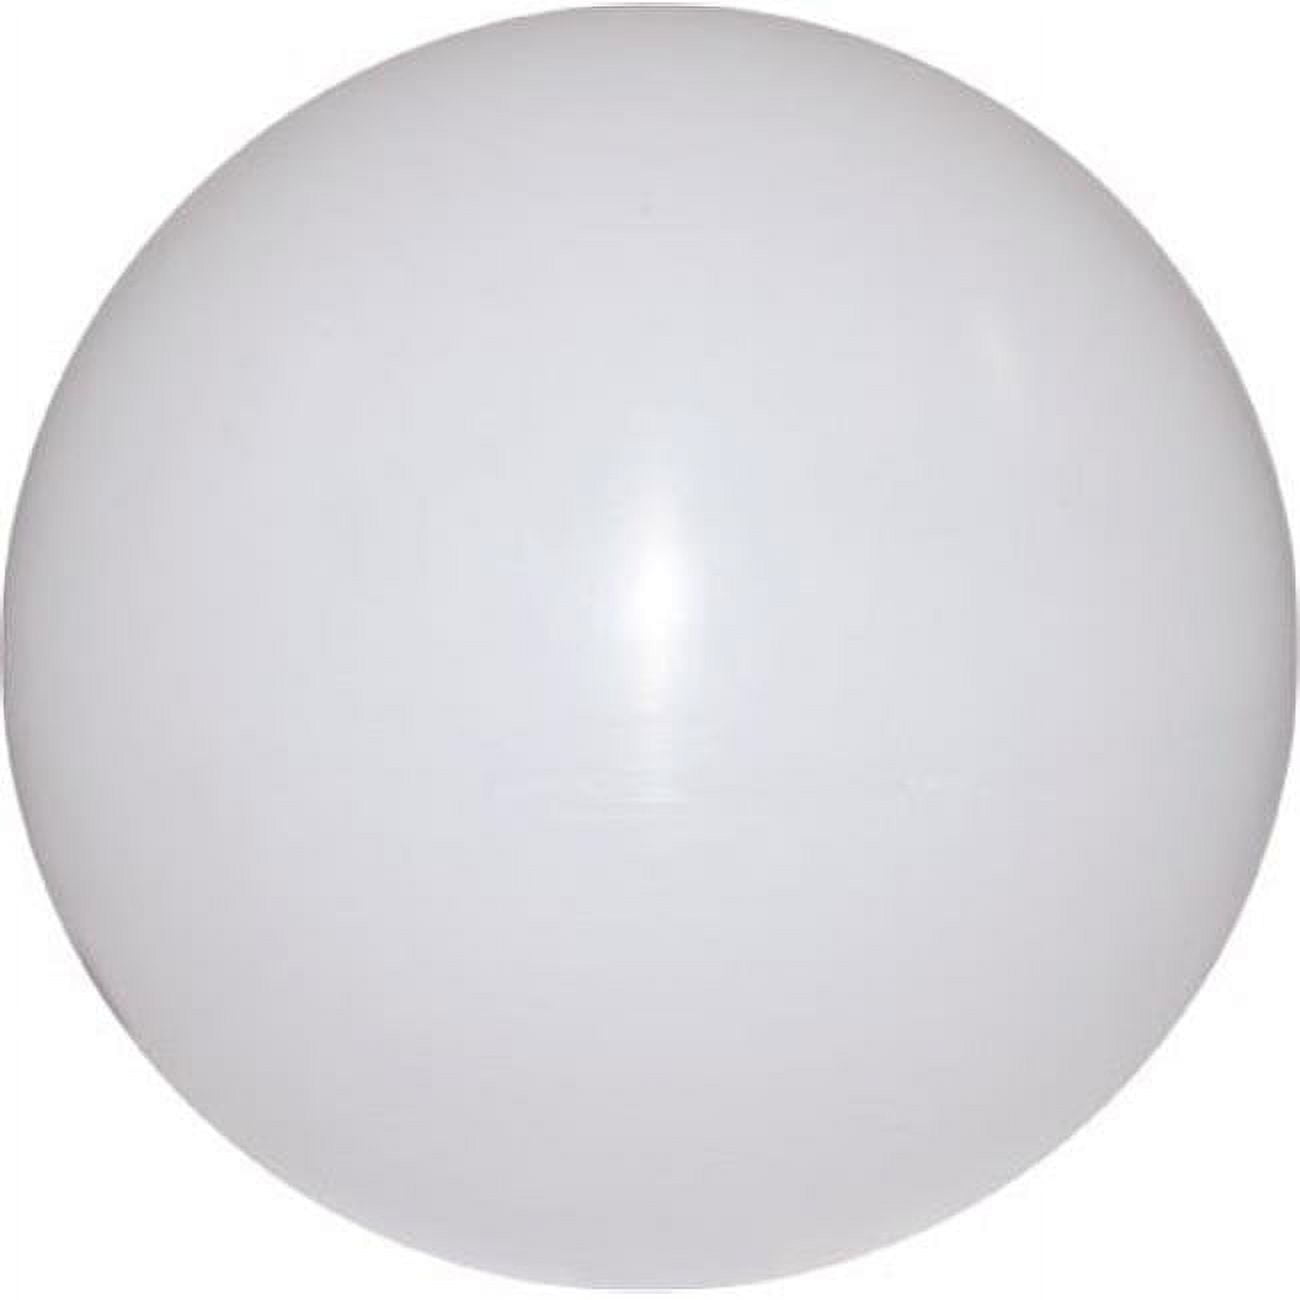 P-glb-62 13 In. X 5.25 In. Neckless Polyethylene White Globe